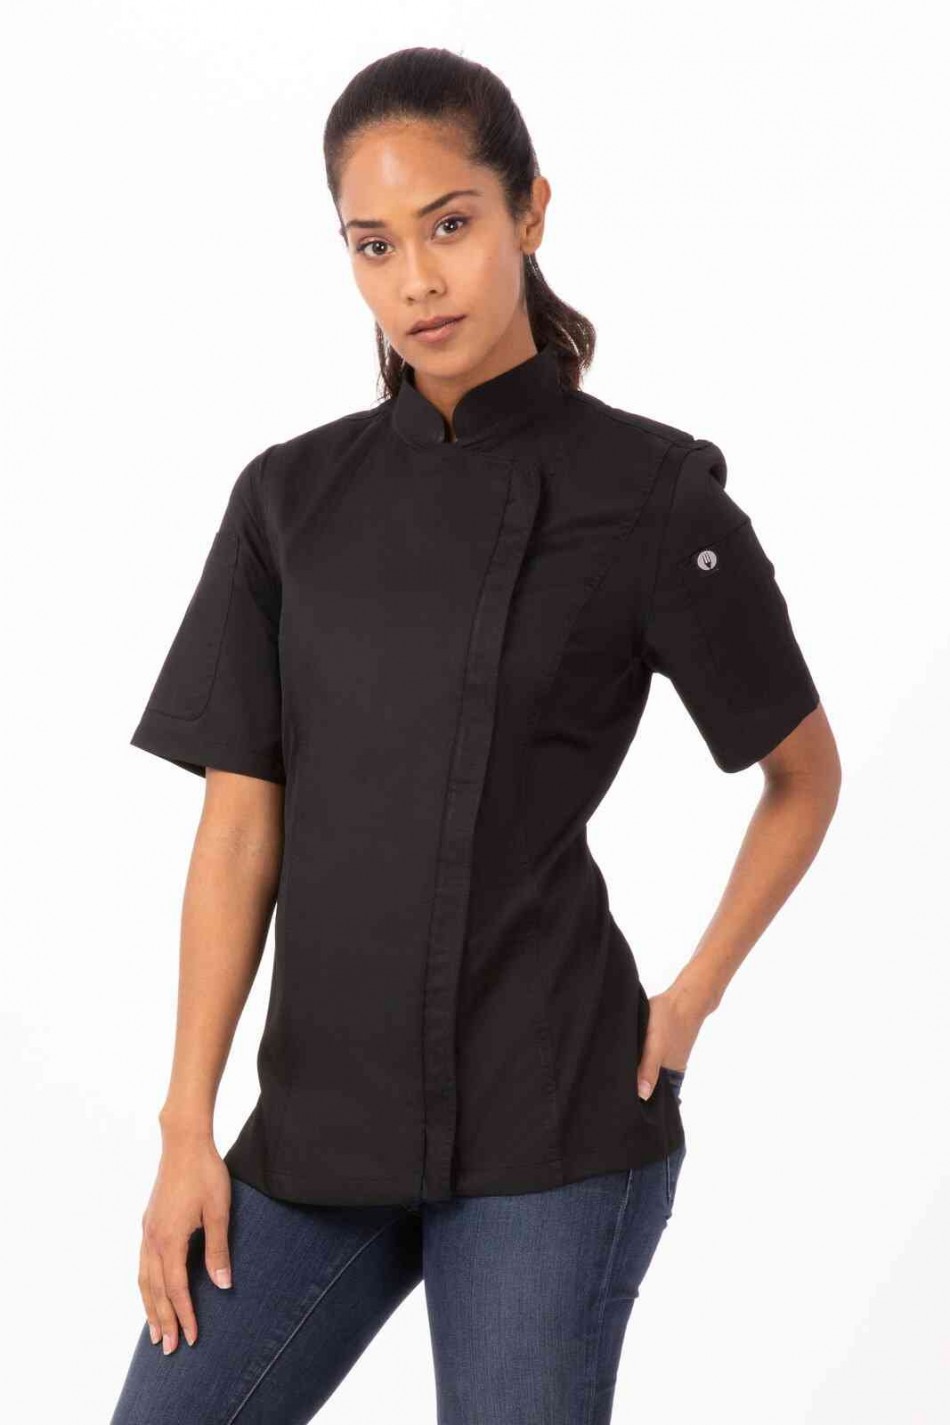 Springfield Womens Black Zipper Chef Jacket by Chef work